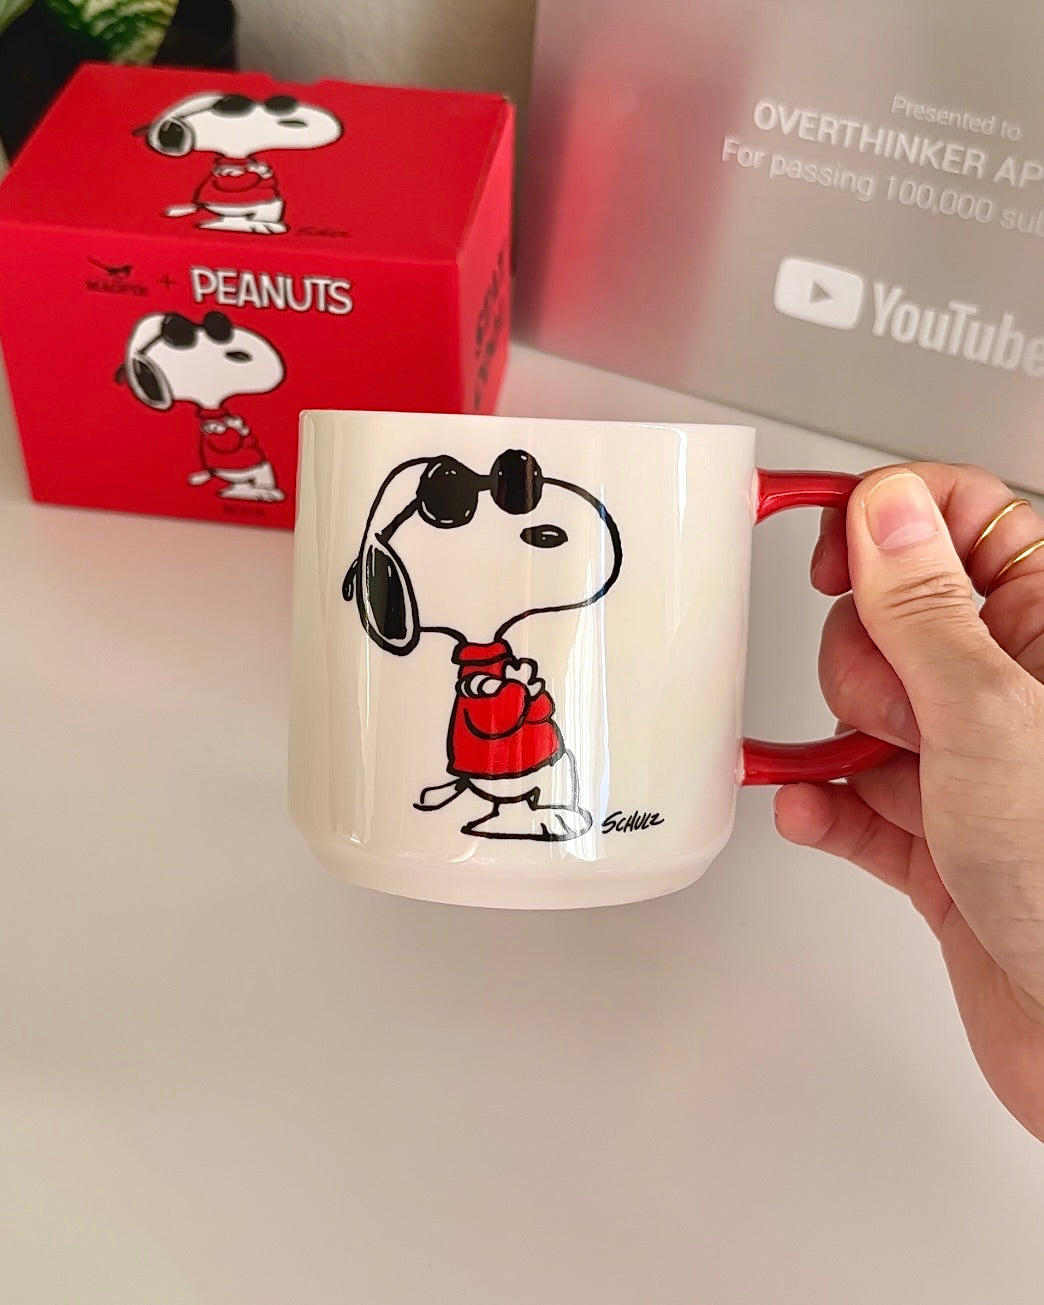 Snoopy Ceramic Mug - Stay Cool